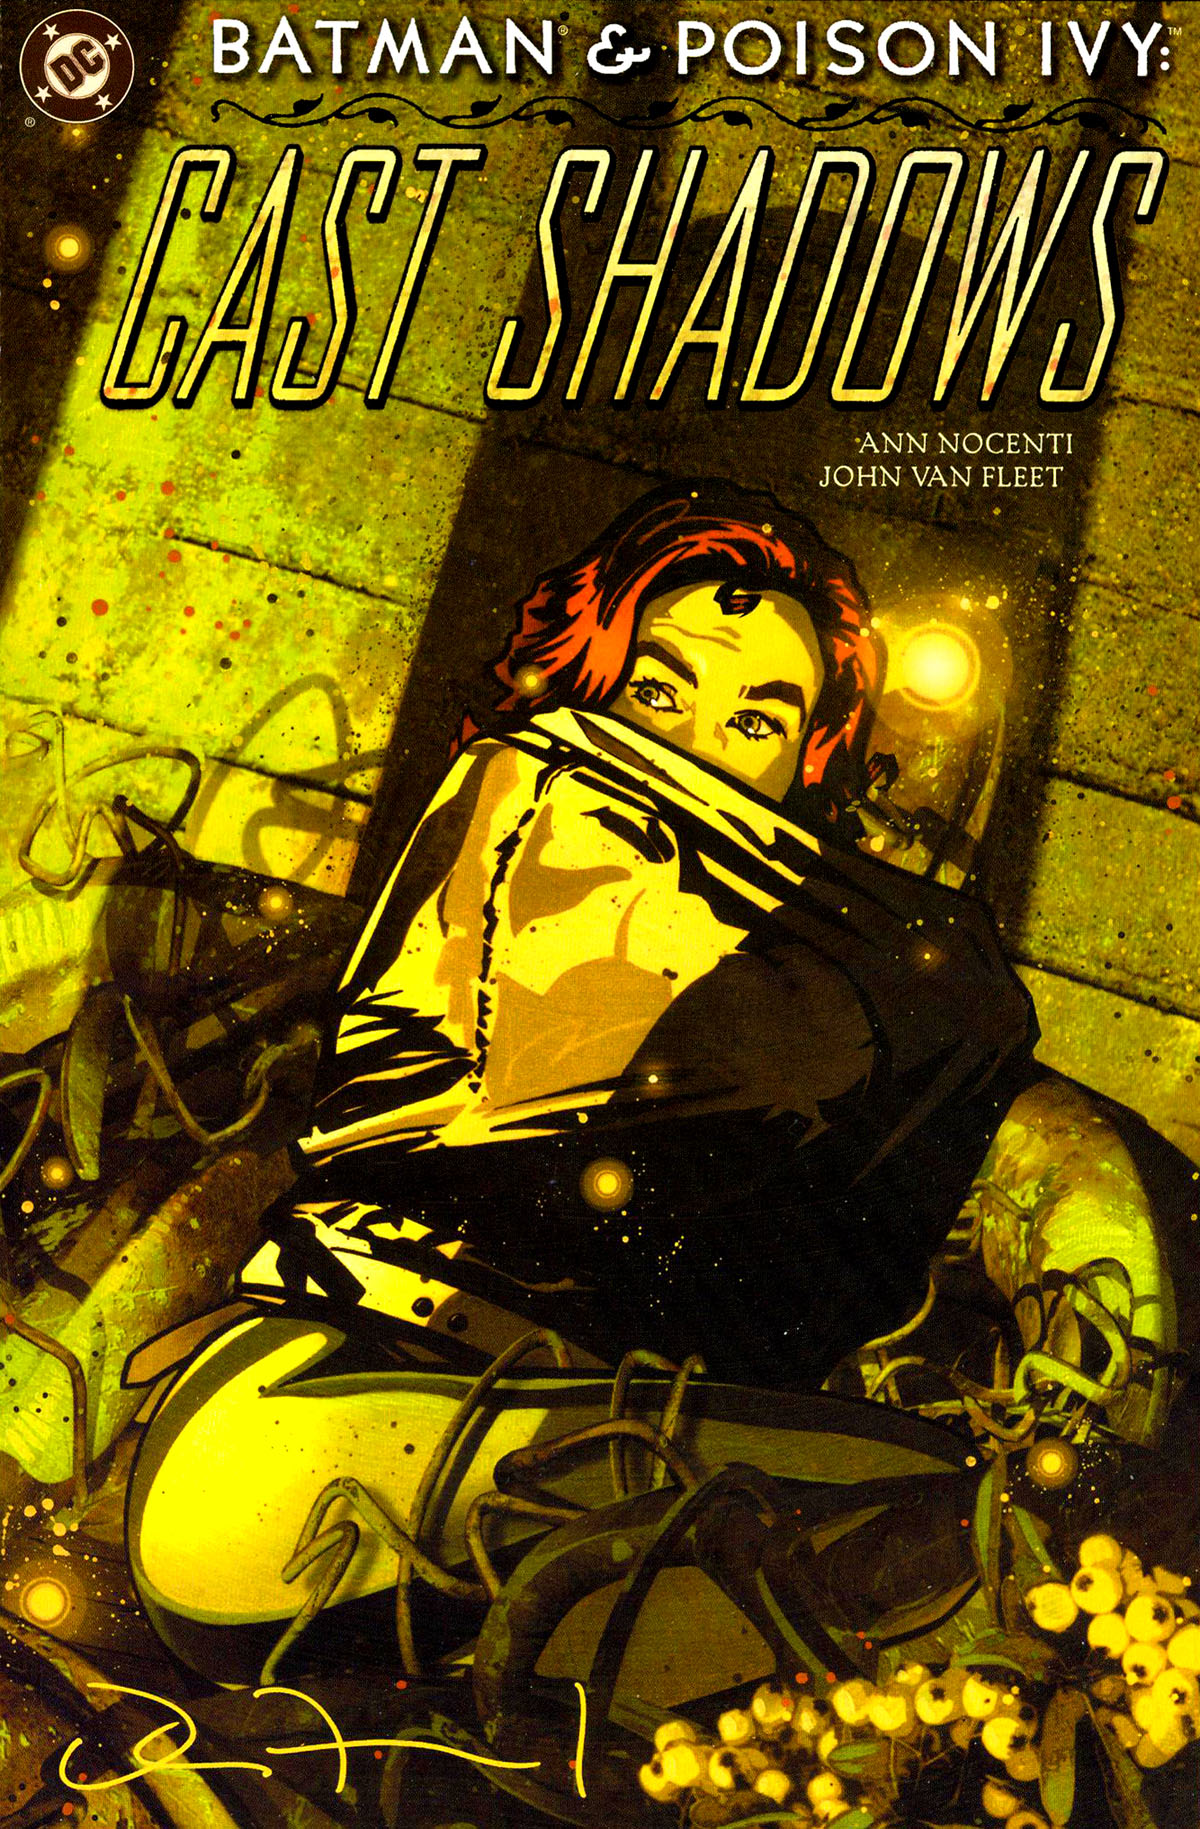 Read online Batman/Poison Ivy: Cast Shadows comic -  Issue # Full - 1